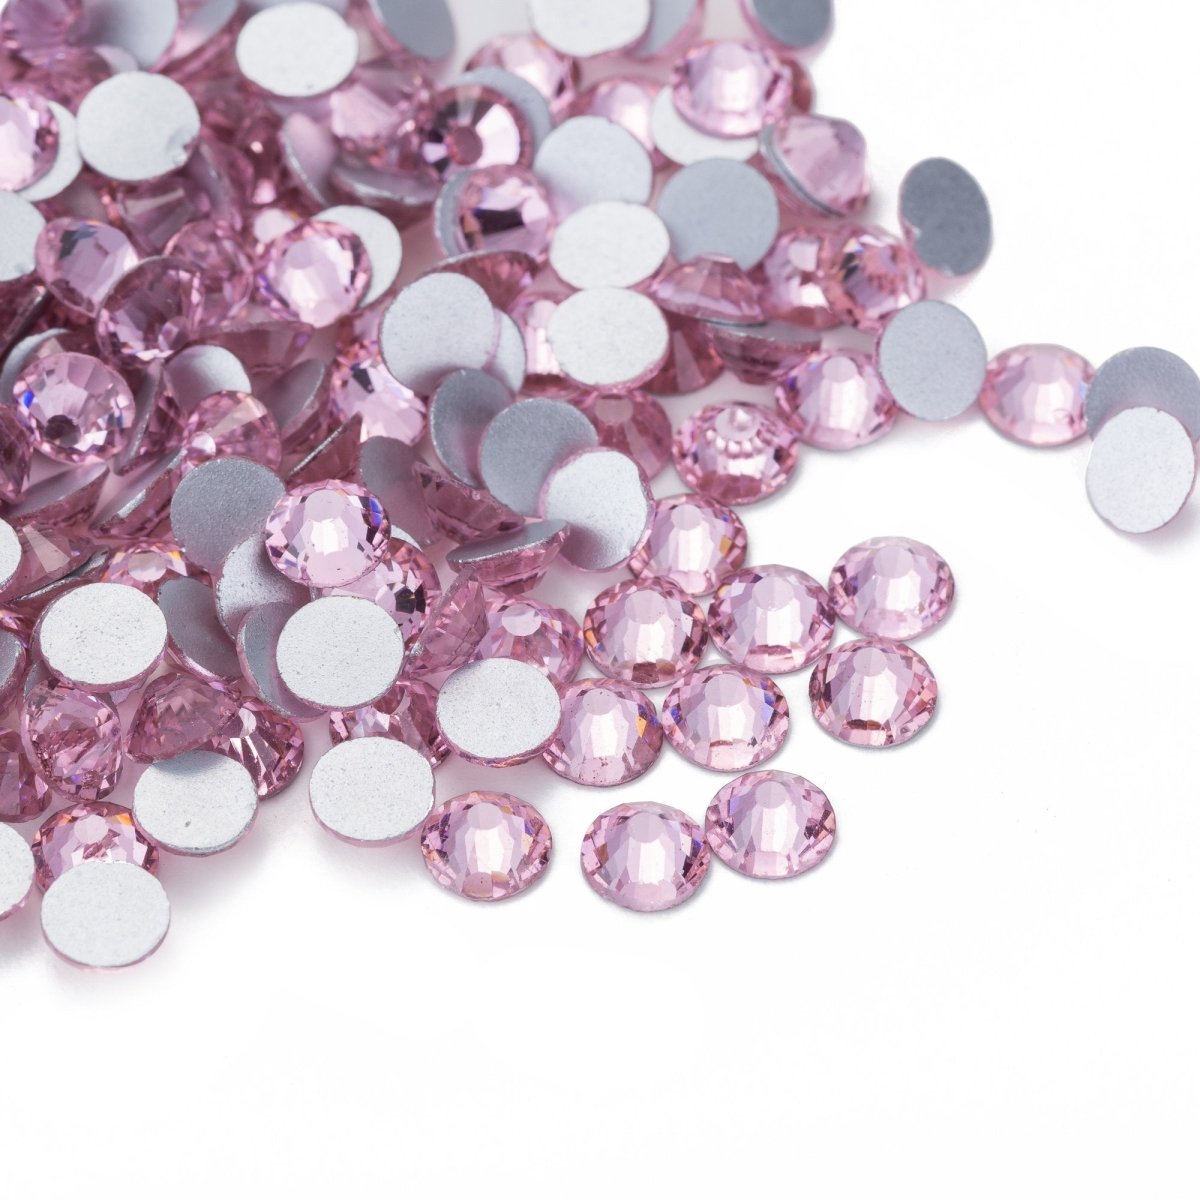 1440 pcs High Quality Crystal Light Rose Pink Rhinestones Loose Crystal flat back No Hot Fix glass beads Size ss10 / ss 12 / ss 16 / ss 20, LTROSE - DLUXCA